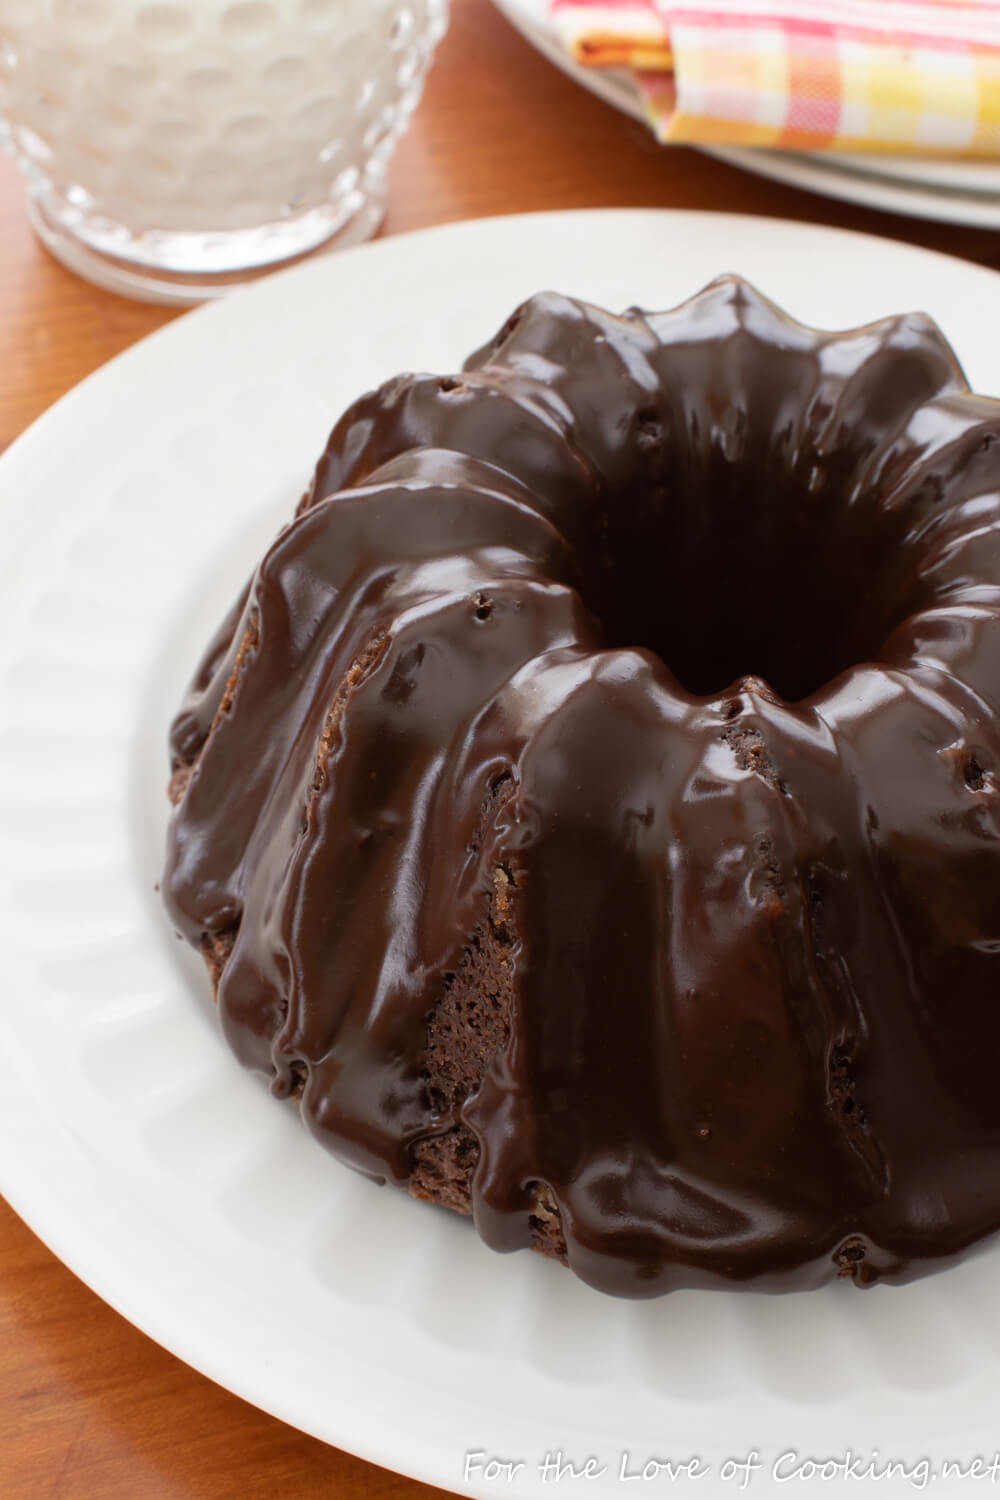 https://fortheloveofcooking-net.exactdn.com/wp-content/uploads/2021/02/Chocolate-Sour-Cream-Bundt-Cake-8802.jpg?strip=all&lossy=1&quality=90&w=2560&ssl=1